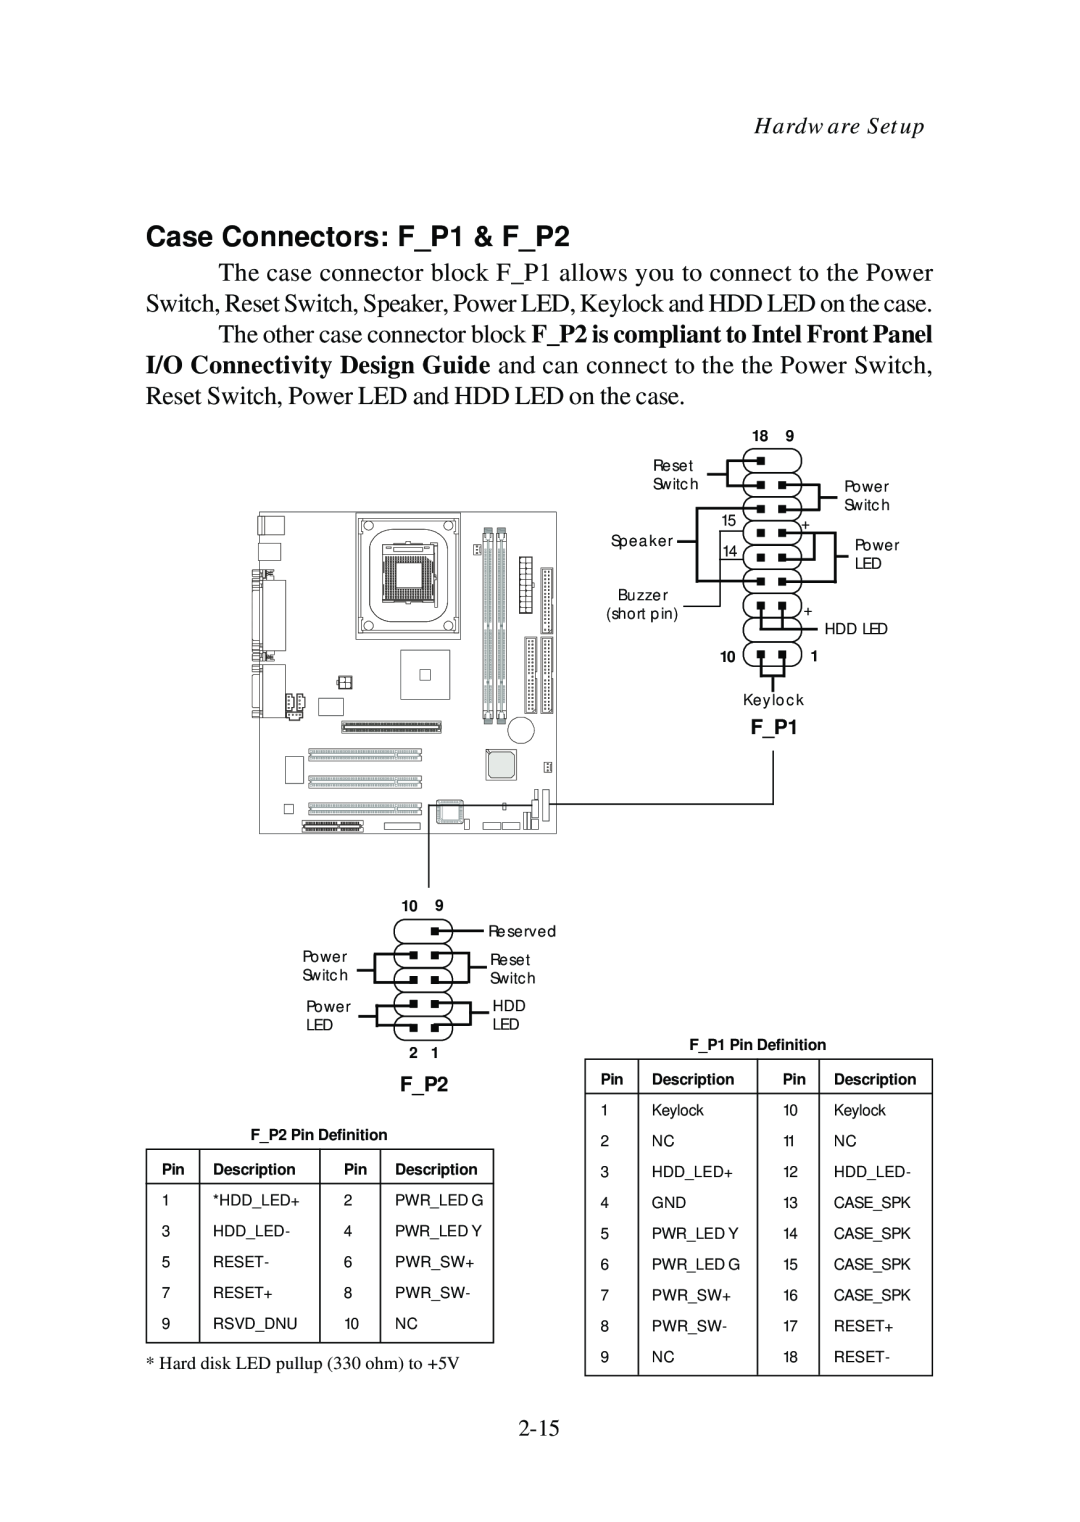 Premio Computer Aries/Centella manual Case Connectors FP1 & FP2, Hardware Setup, 2-15 